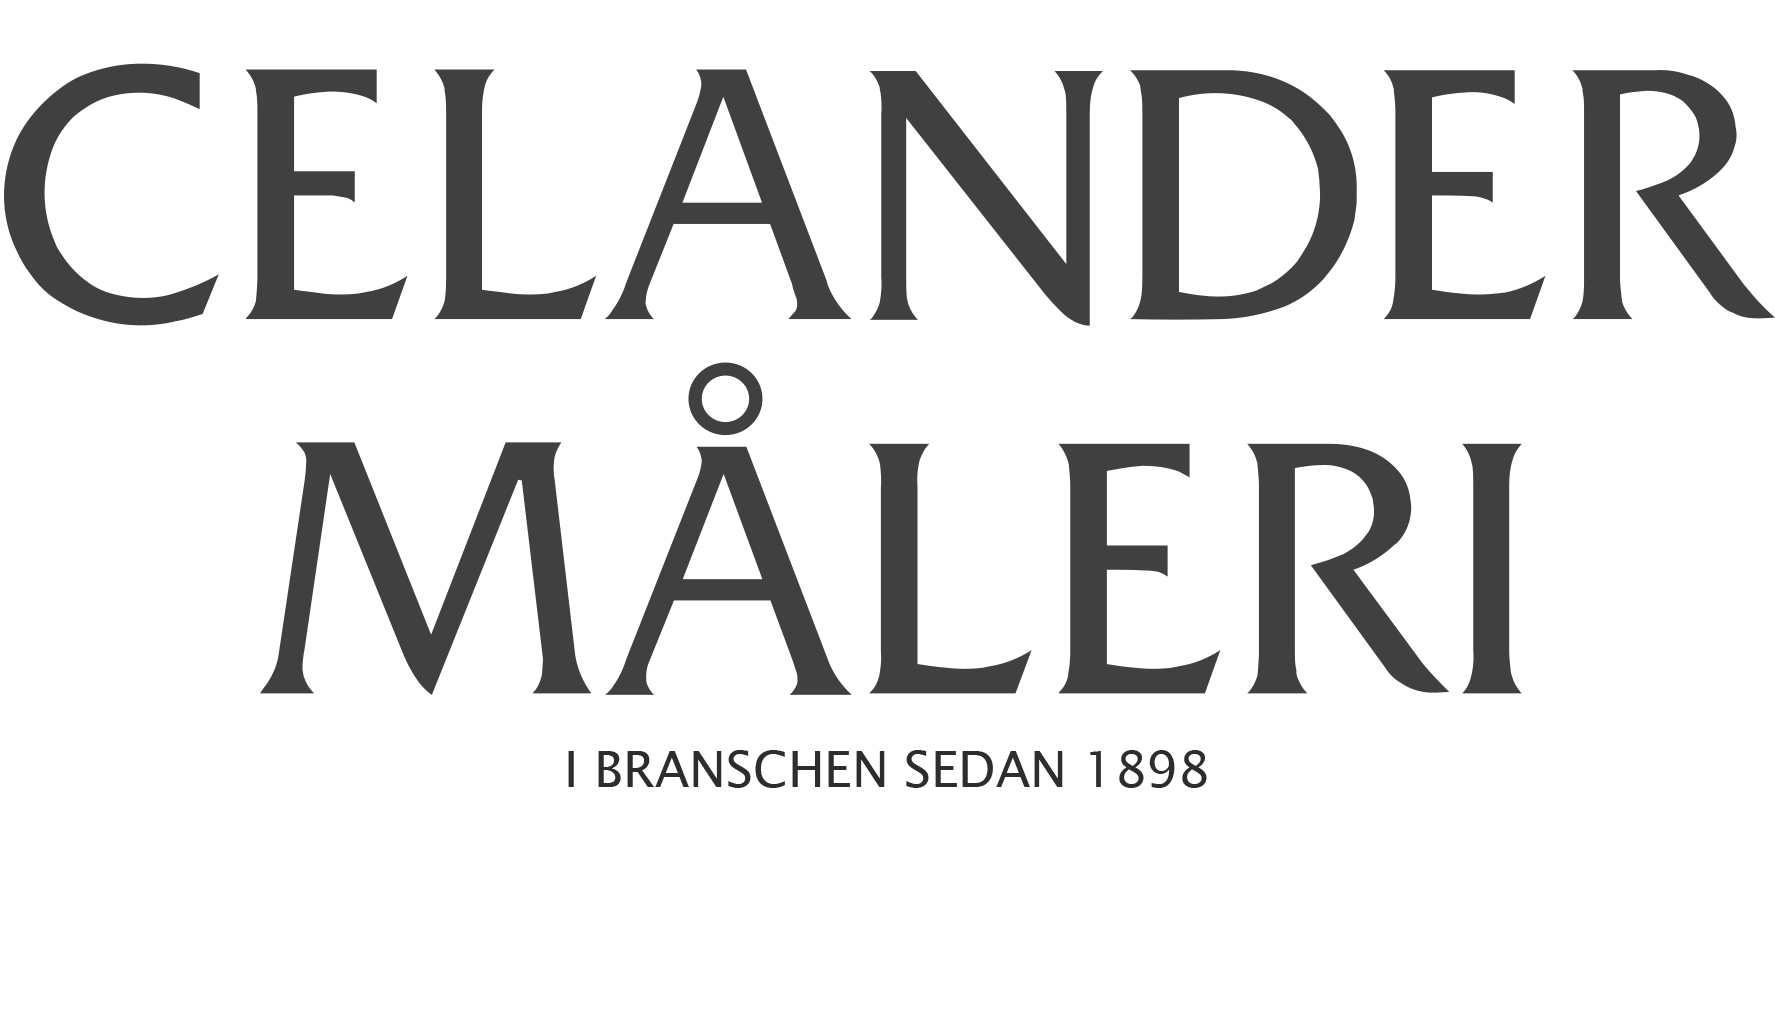 Celander Halland logotyp